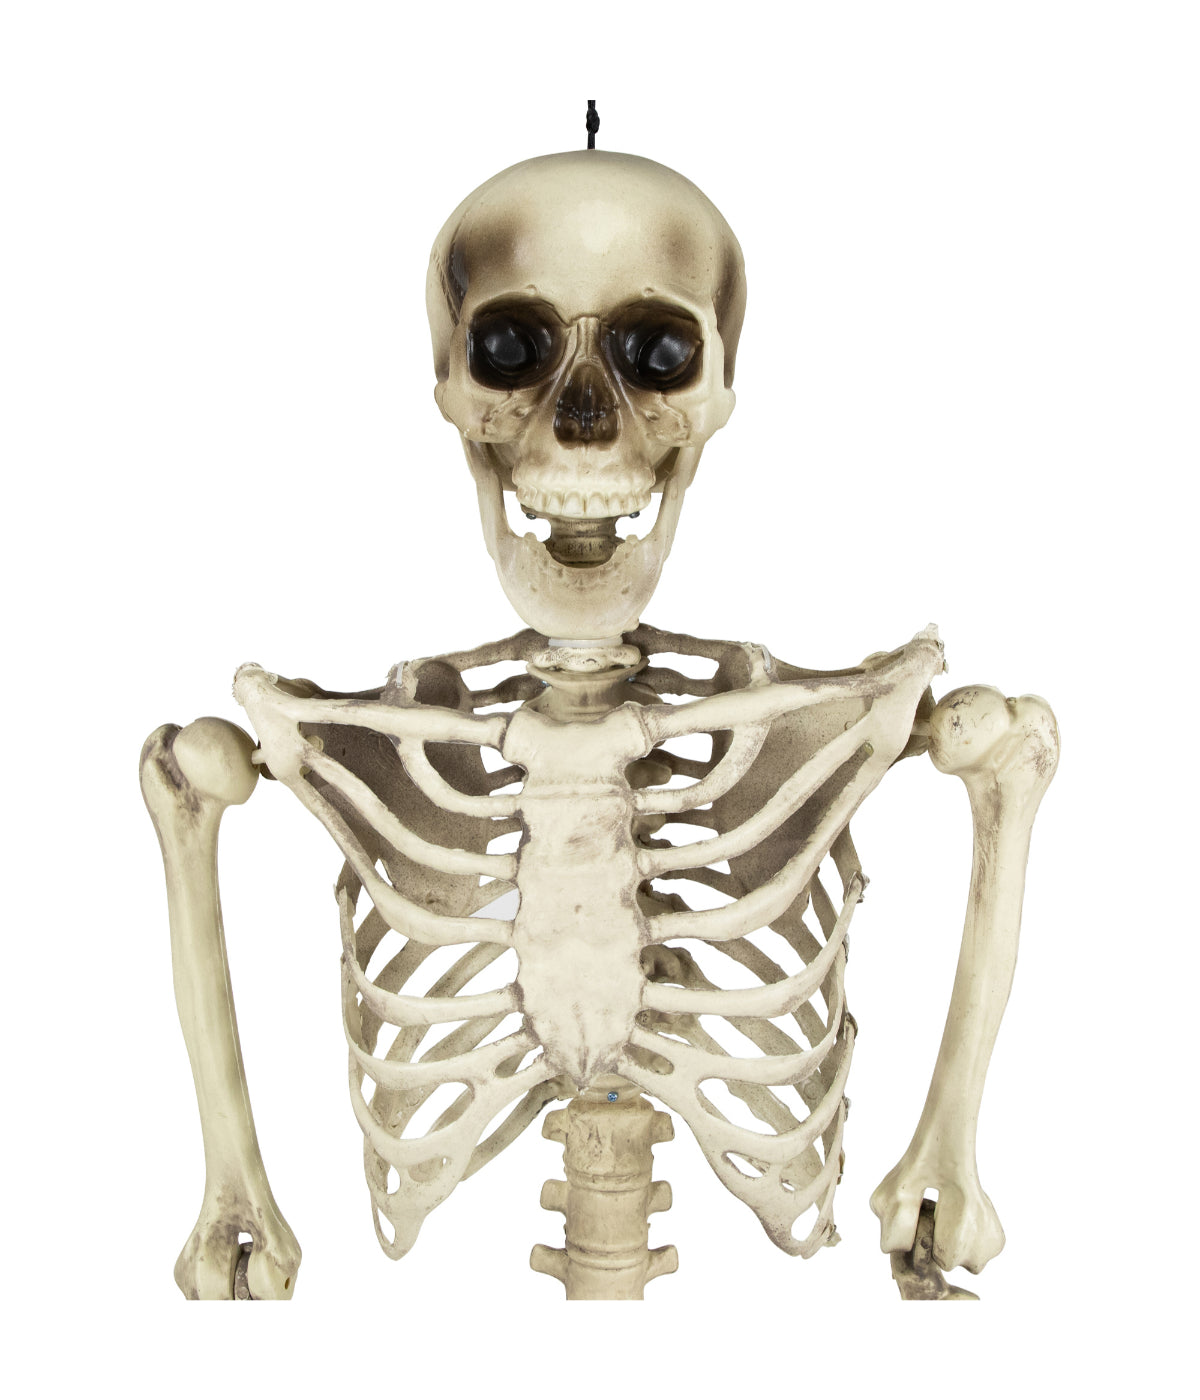 Skeleton Hanging Halloween Decoration